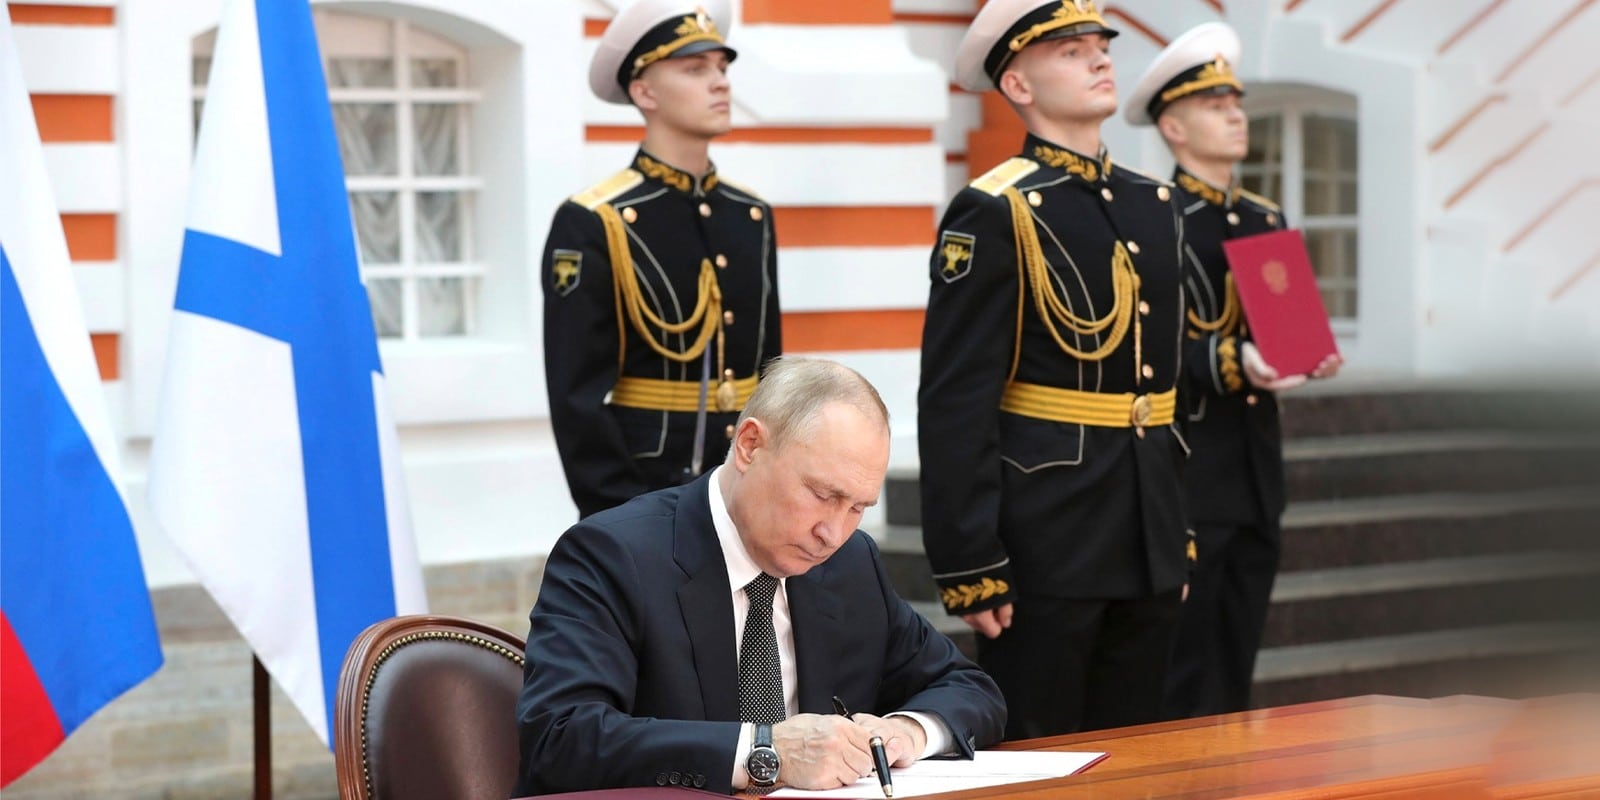 July 31, 2022, St Petersburgh, Russia: Russian President Vladimir Putin, signs a decree on Naval Doctrine